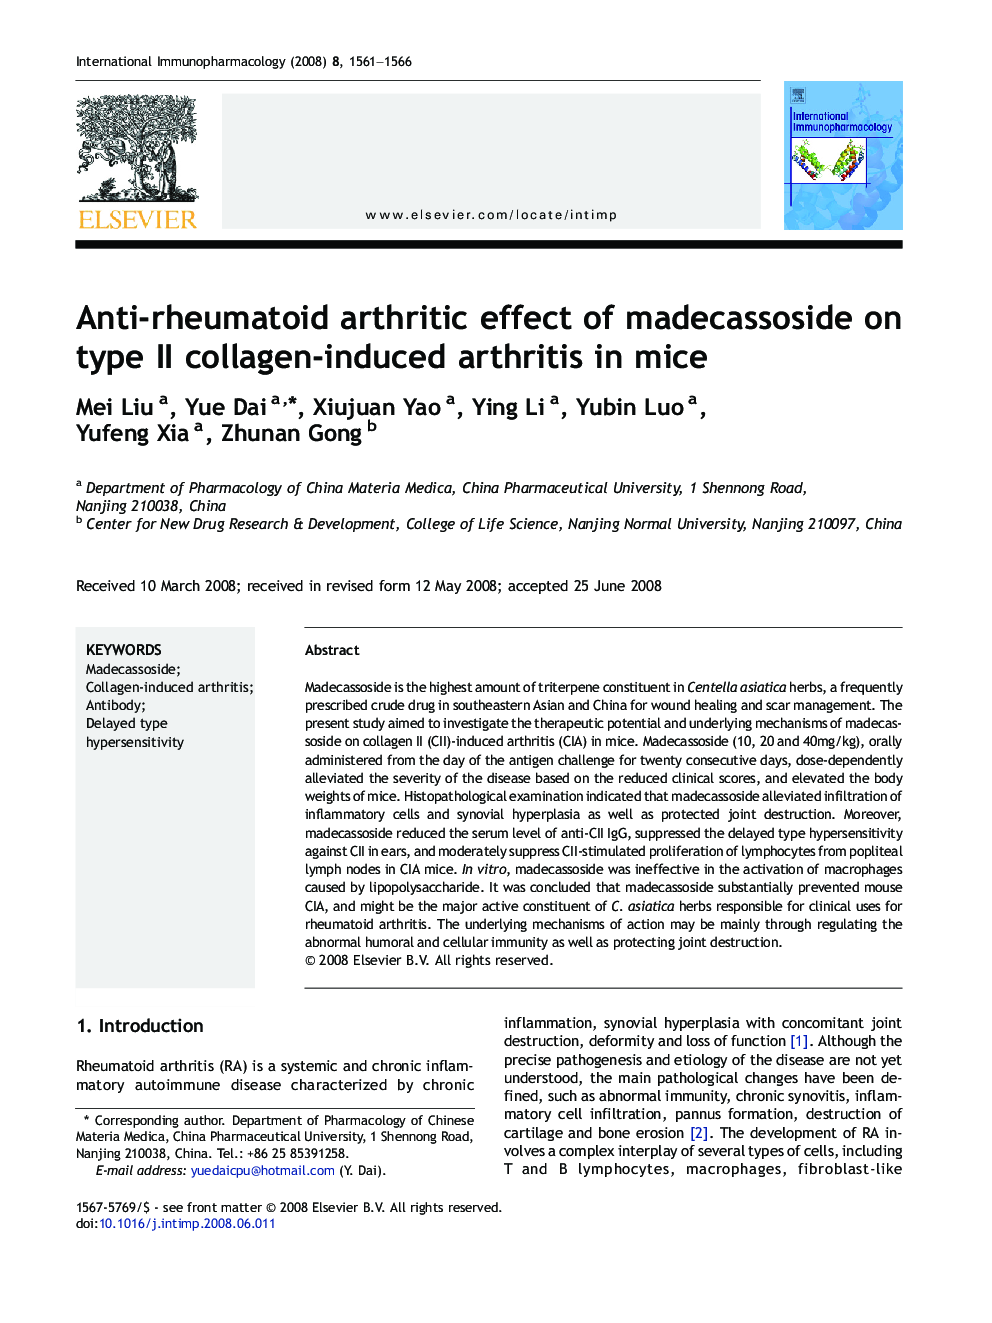 Anti-rheumatoid arthritic effect of madecassoside on type II collagen-induced arthritis in mice